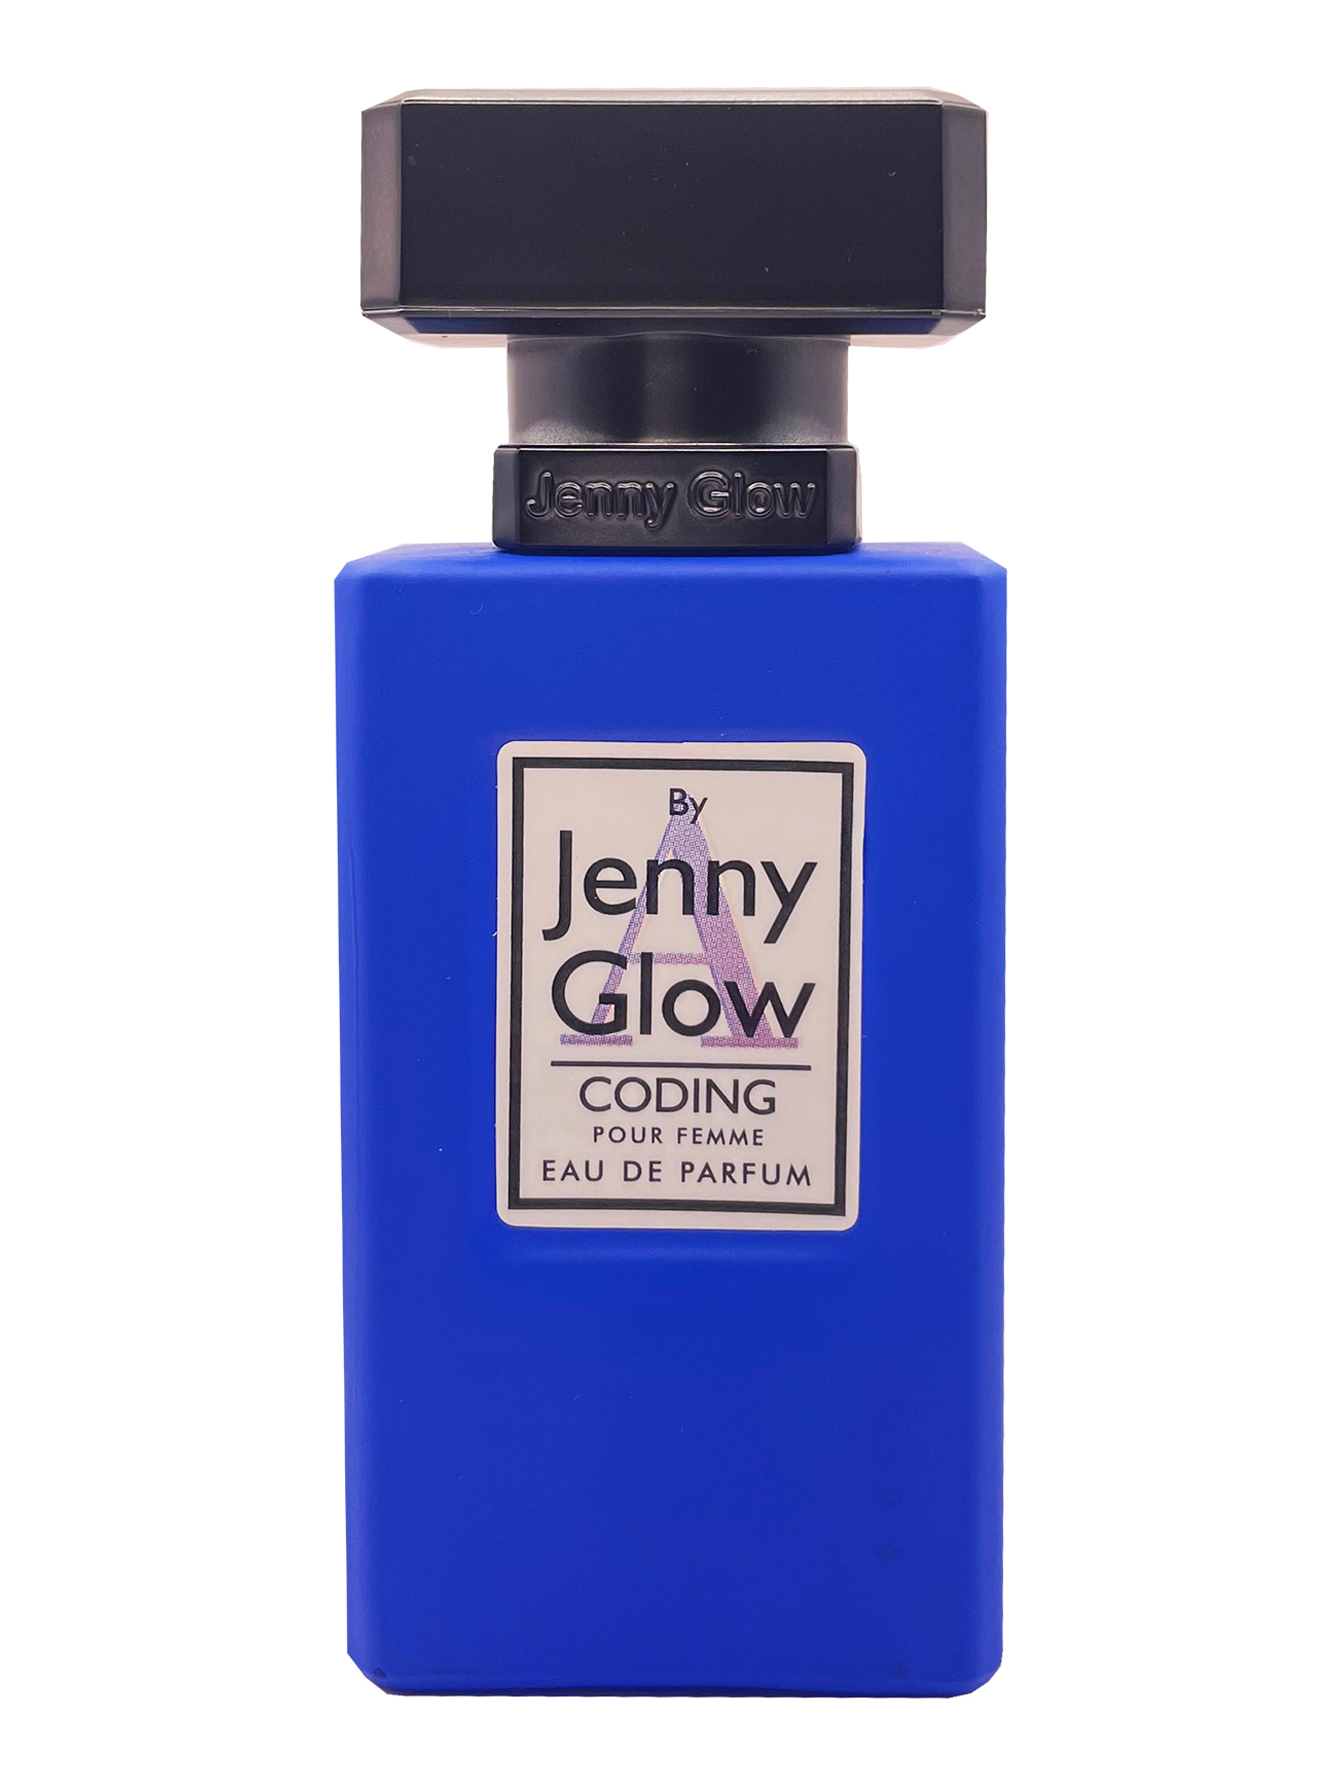 Парфюмерная вода Jenny Glow Coding Pour Femme, 30 мл - Общий вид